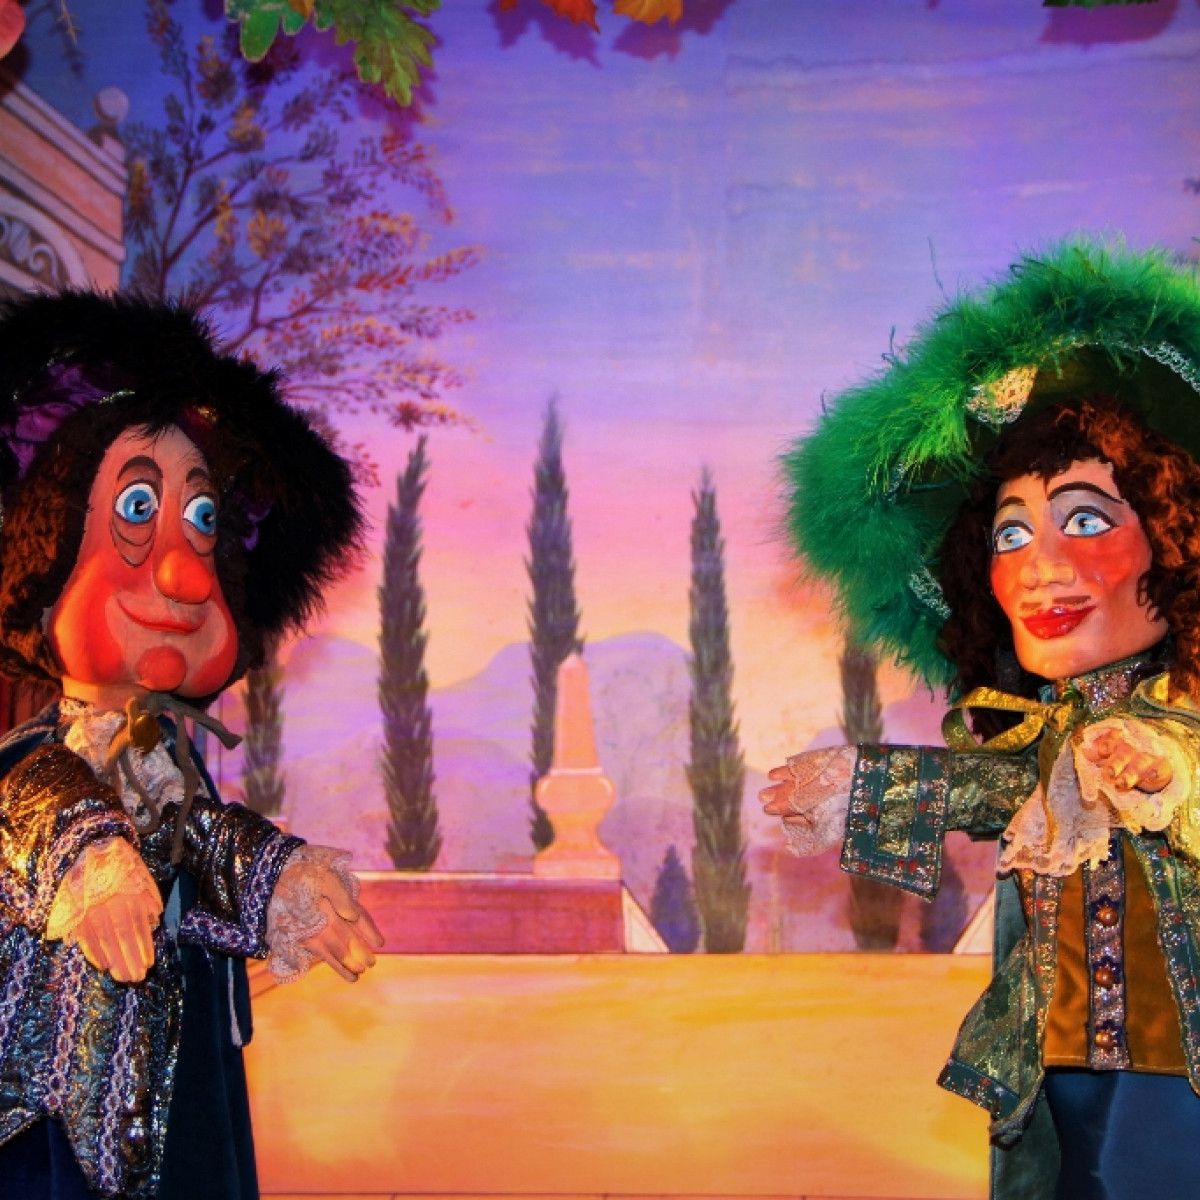 Puppet Shows in Paris